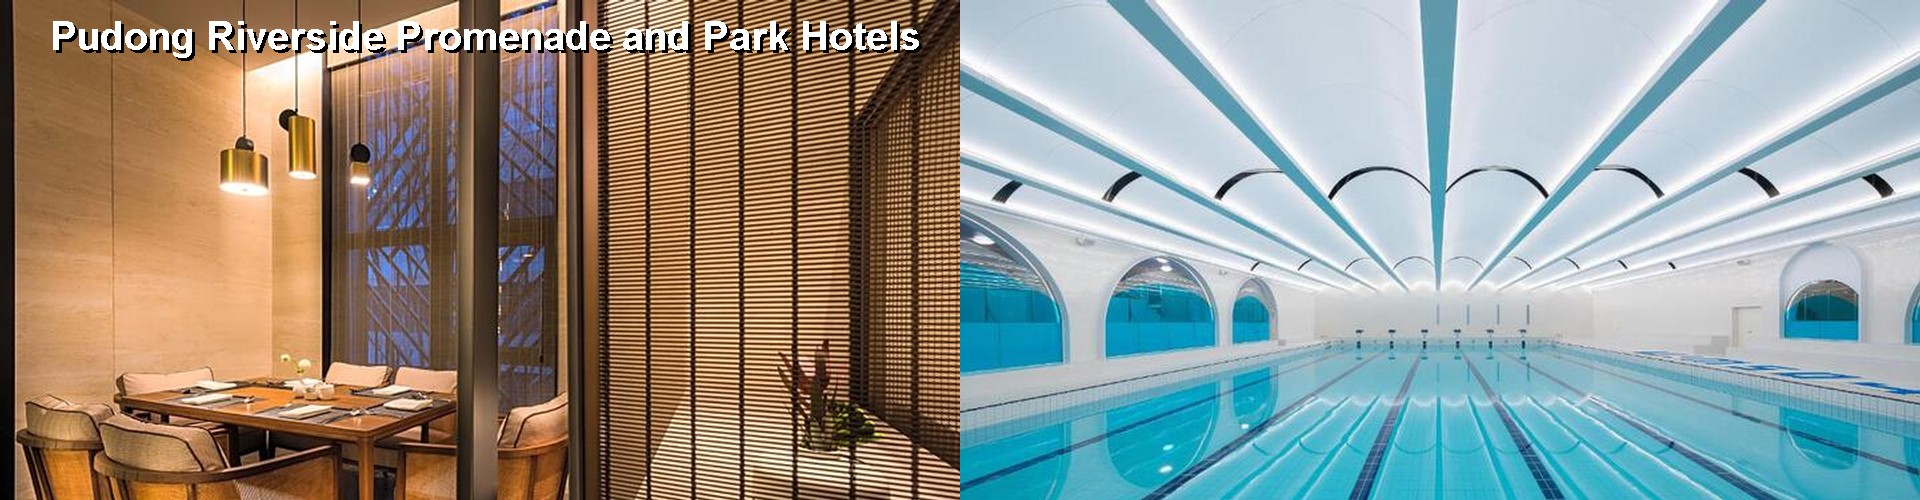 5 Best Hotels near Pudong Riverside Promenade and Park